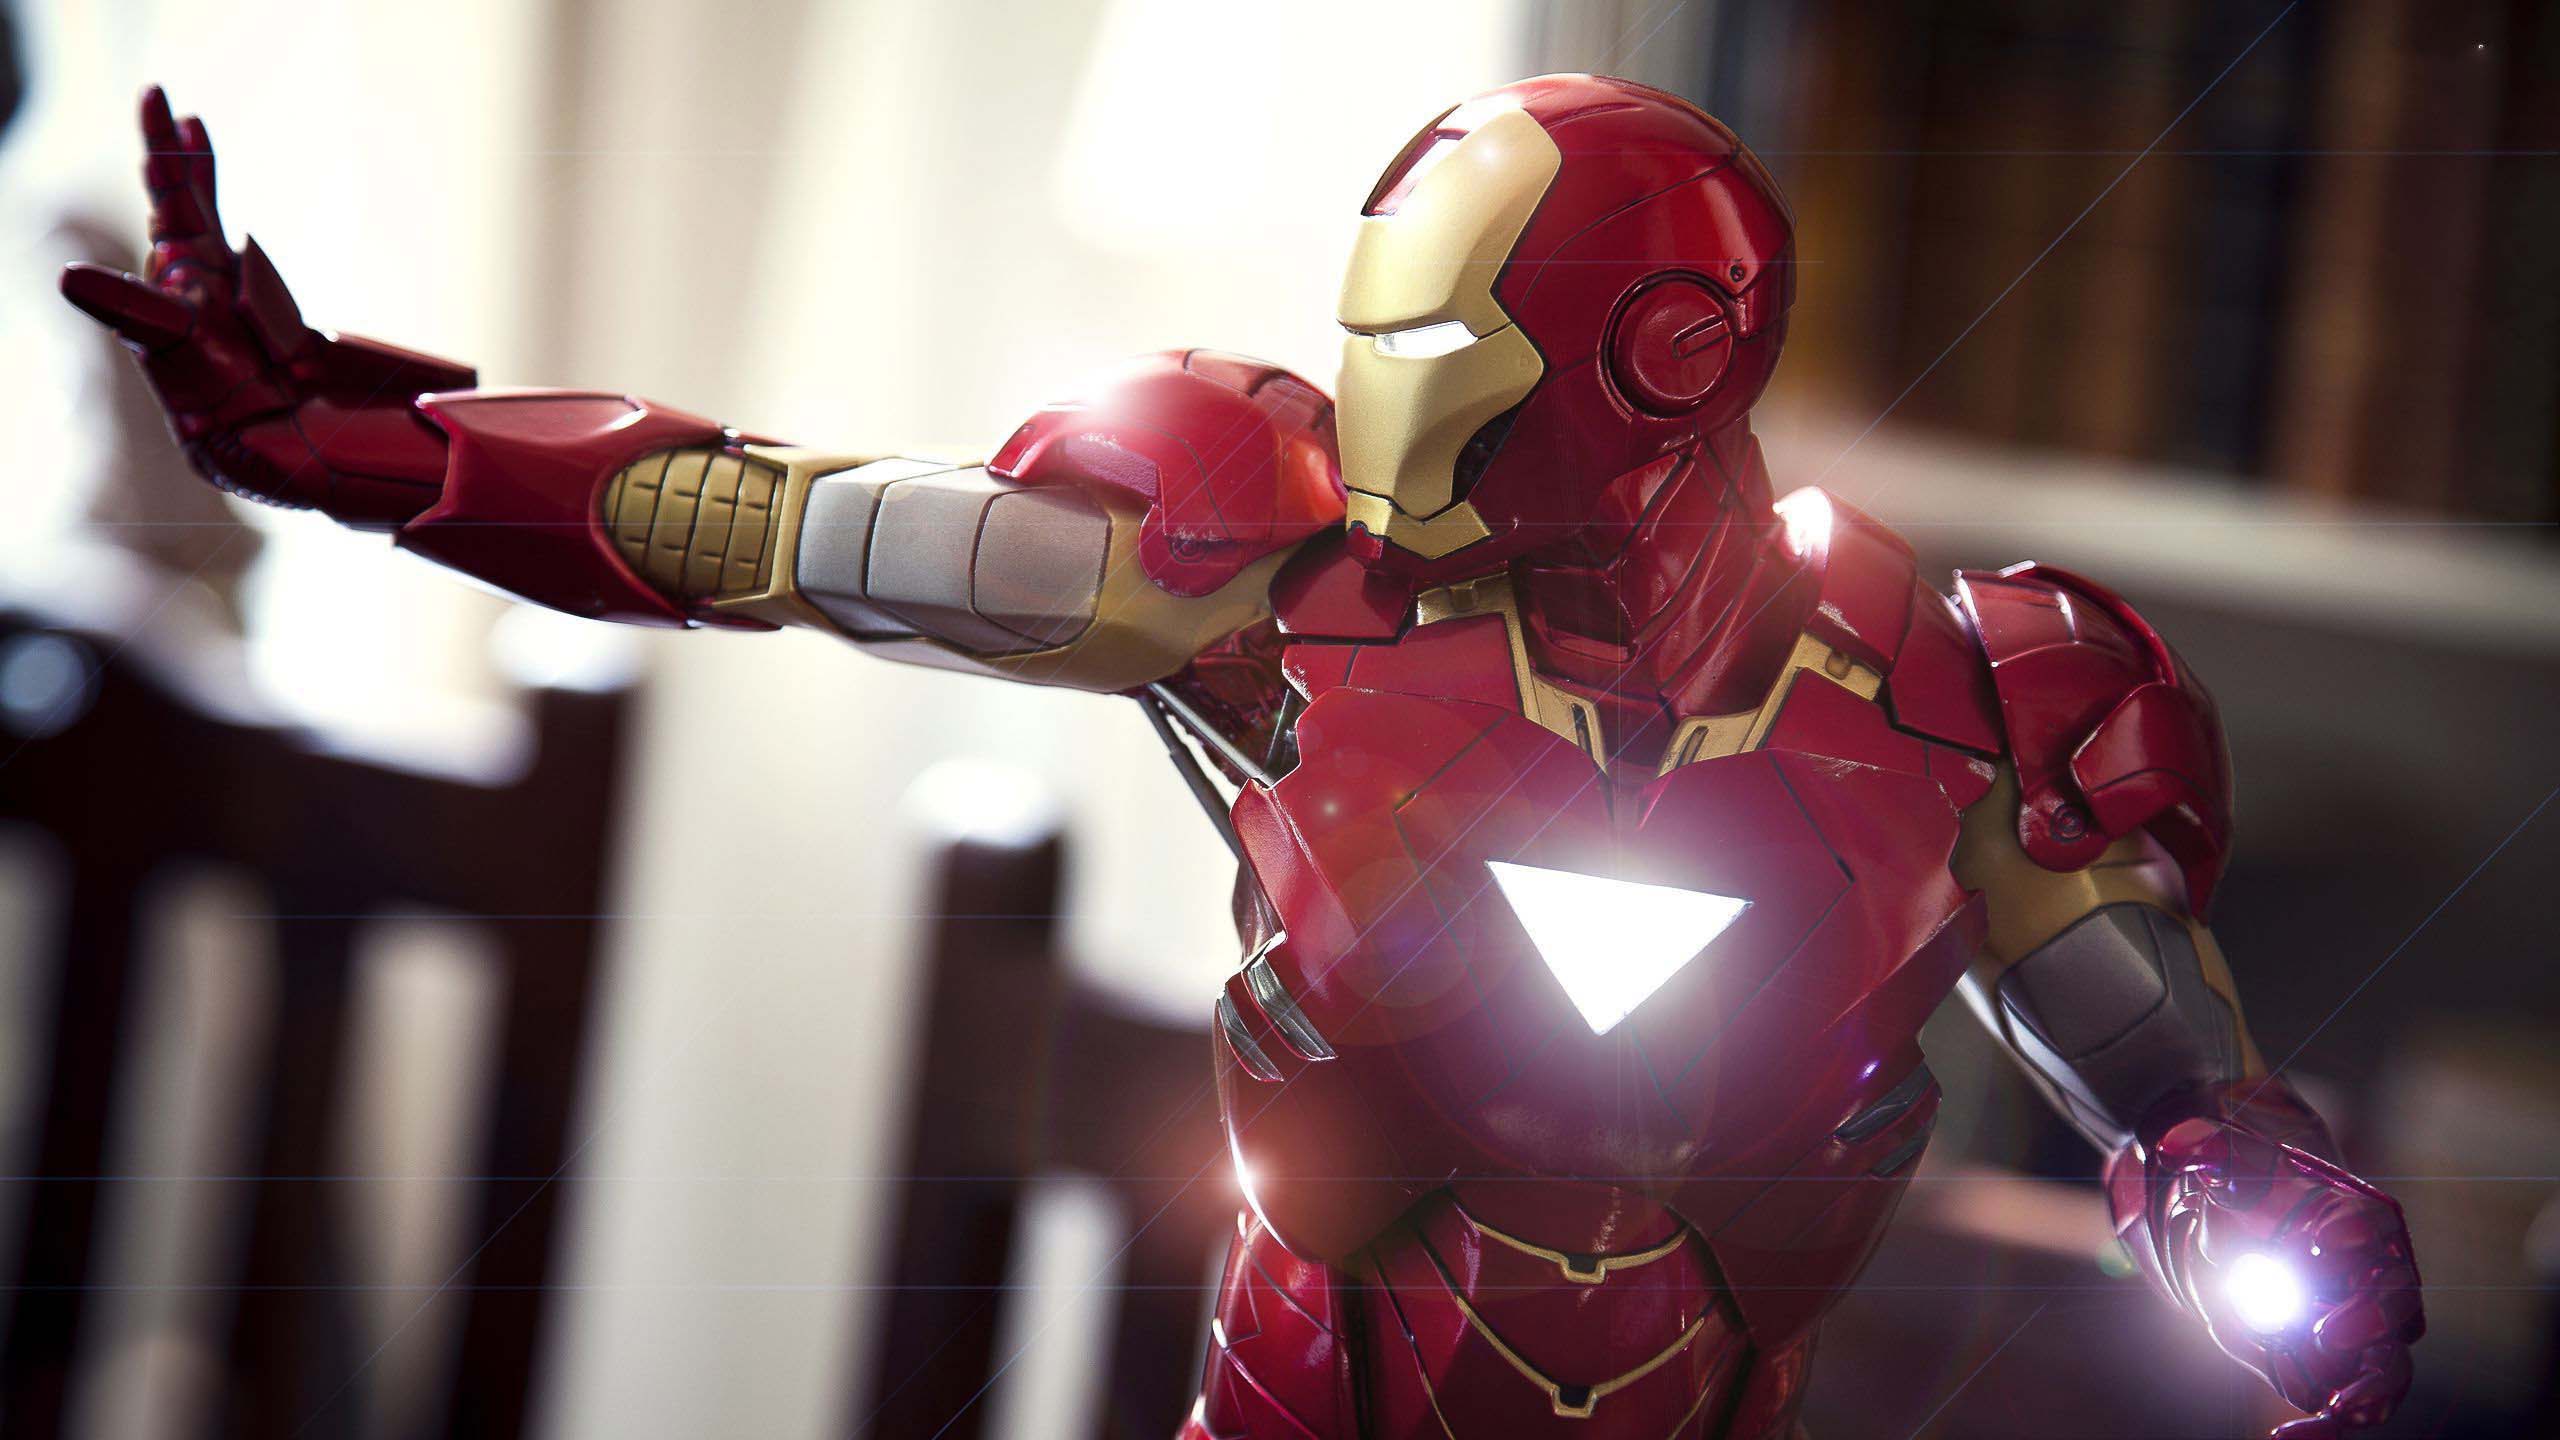 Iron Man Desktop Background Download | Wallpapers, Backgrounds ...